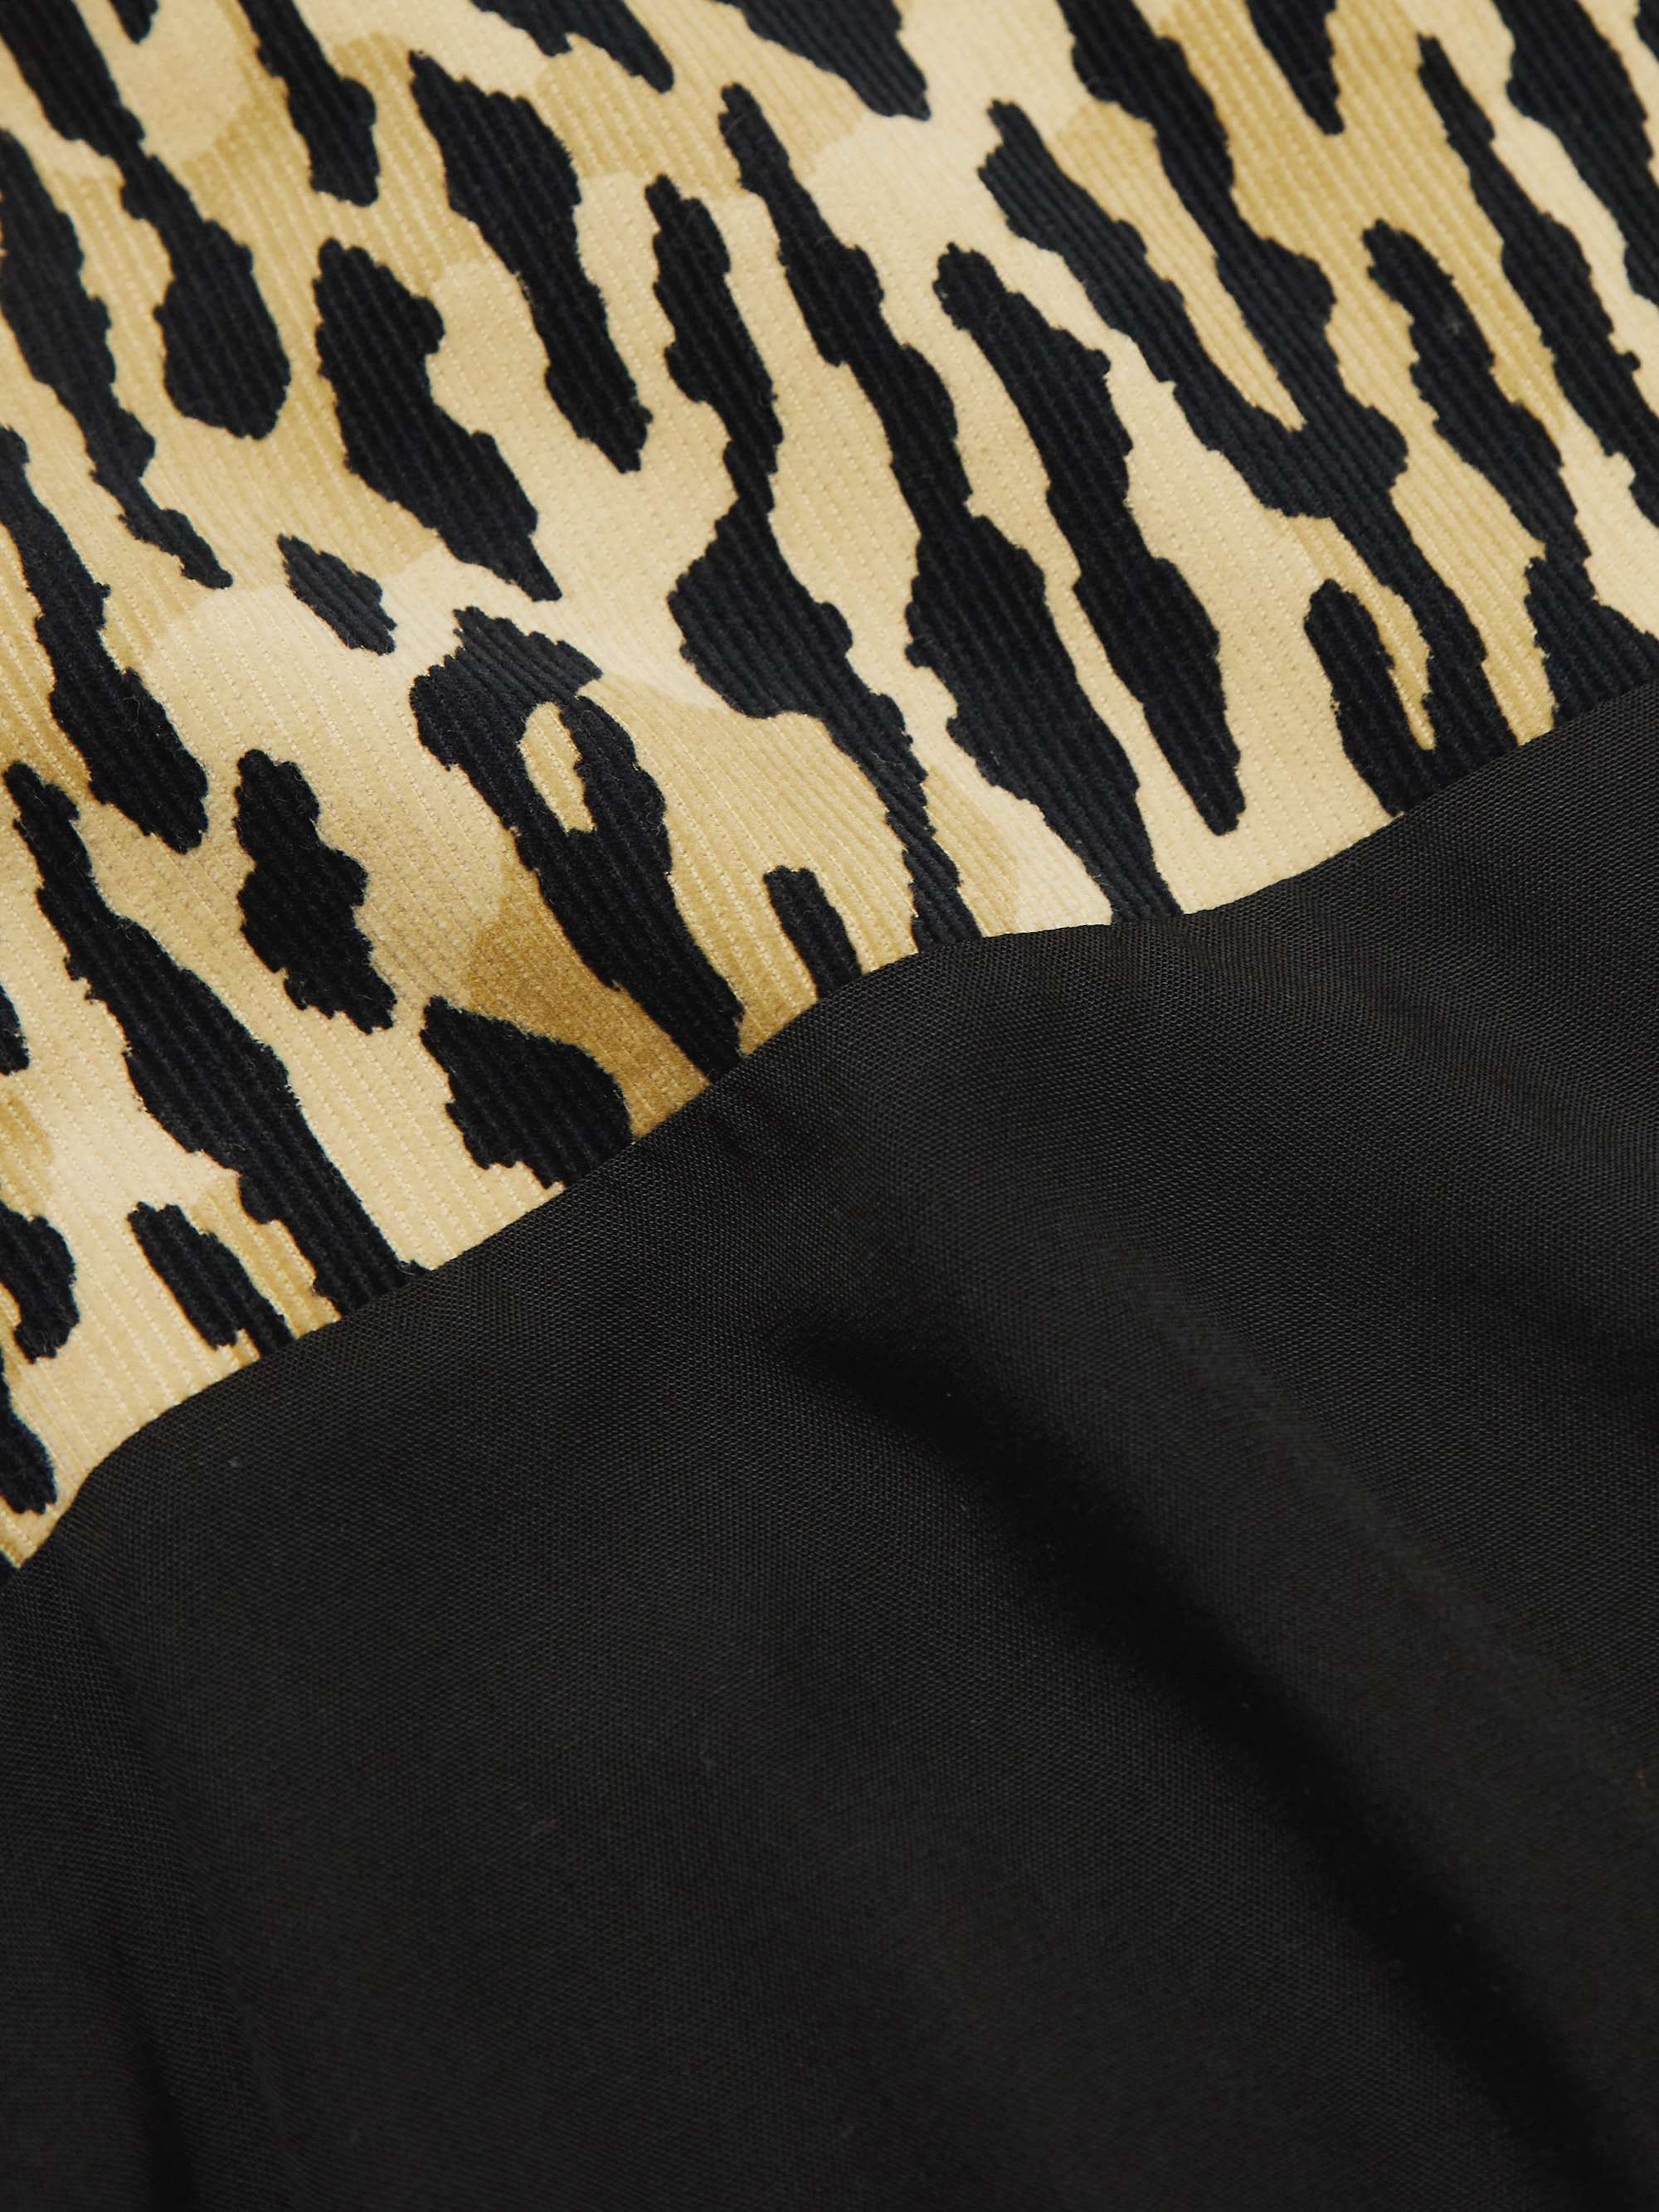 WACKO MARIA Camp-Collar Lyocell and Leopard-Print Cotton-Corduroy Shirt